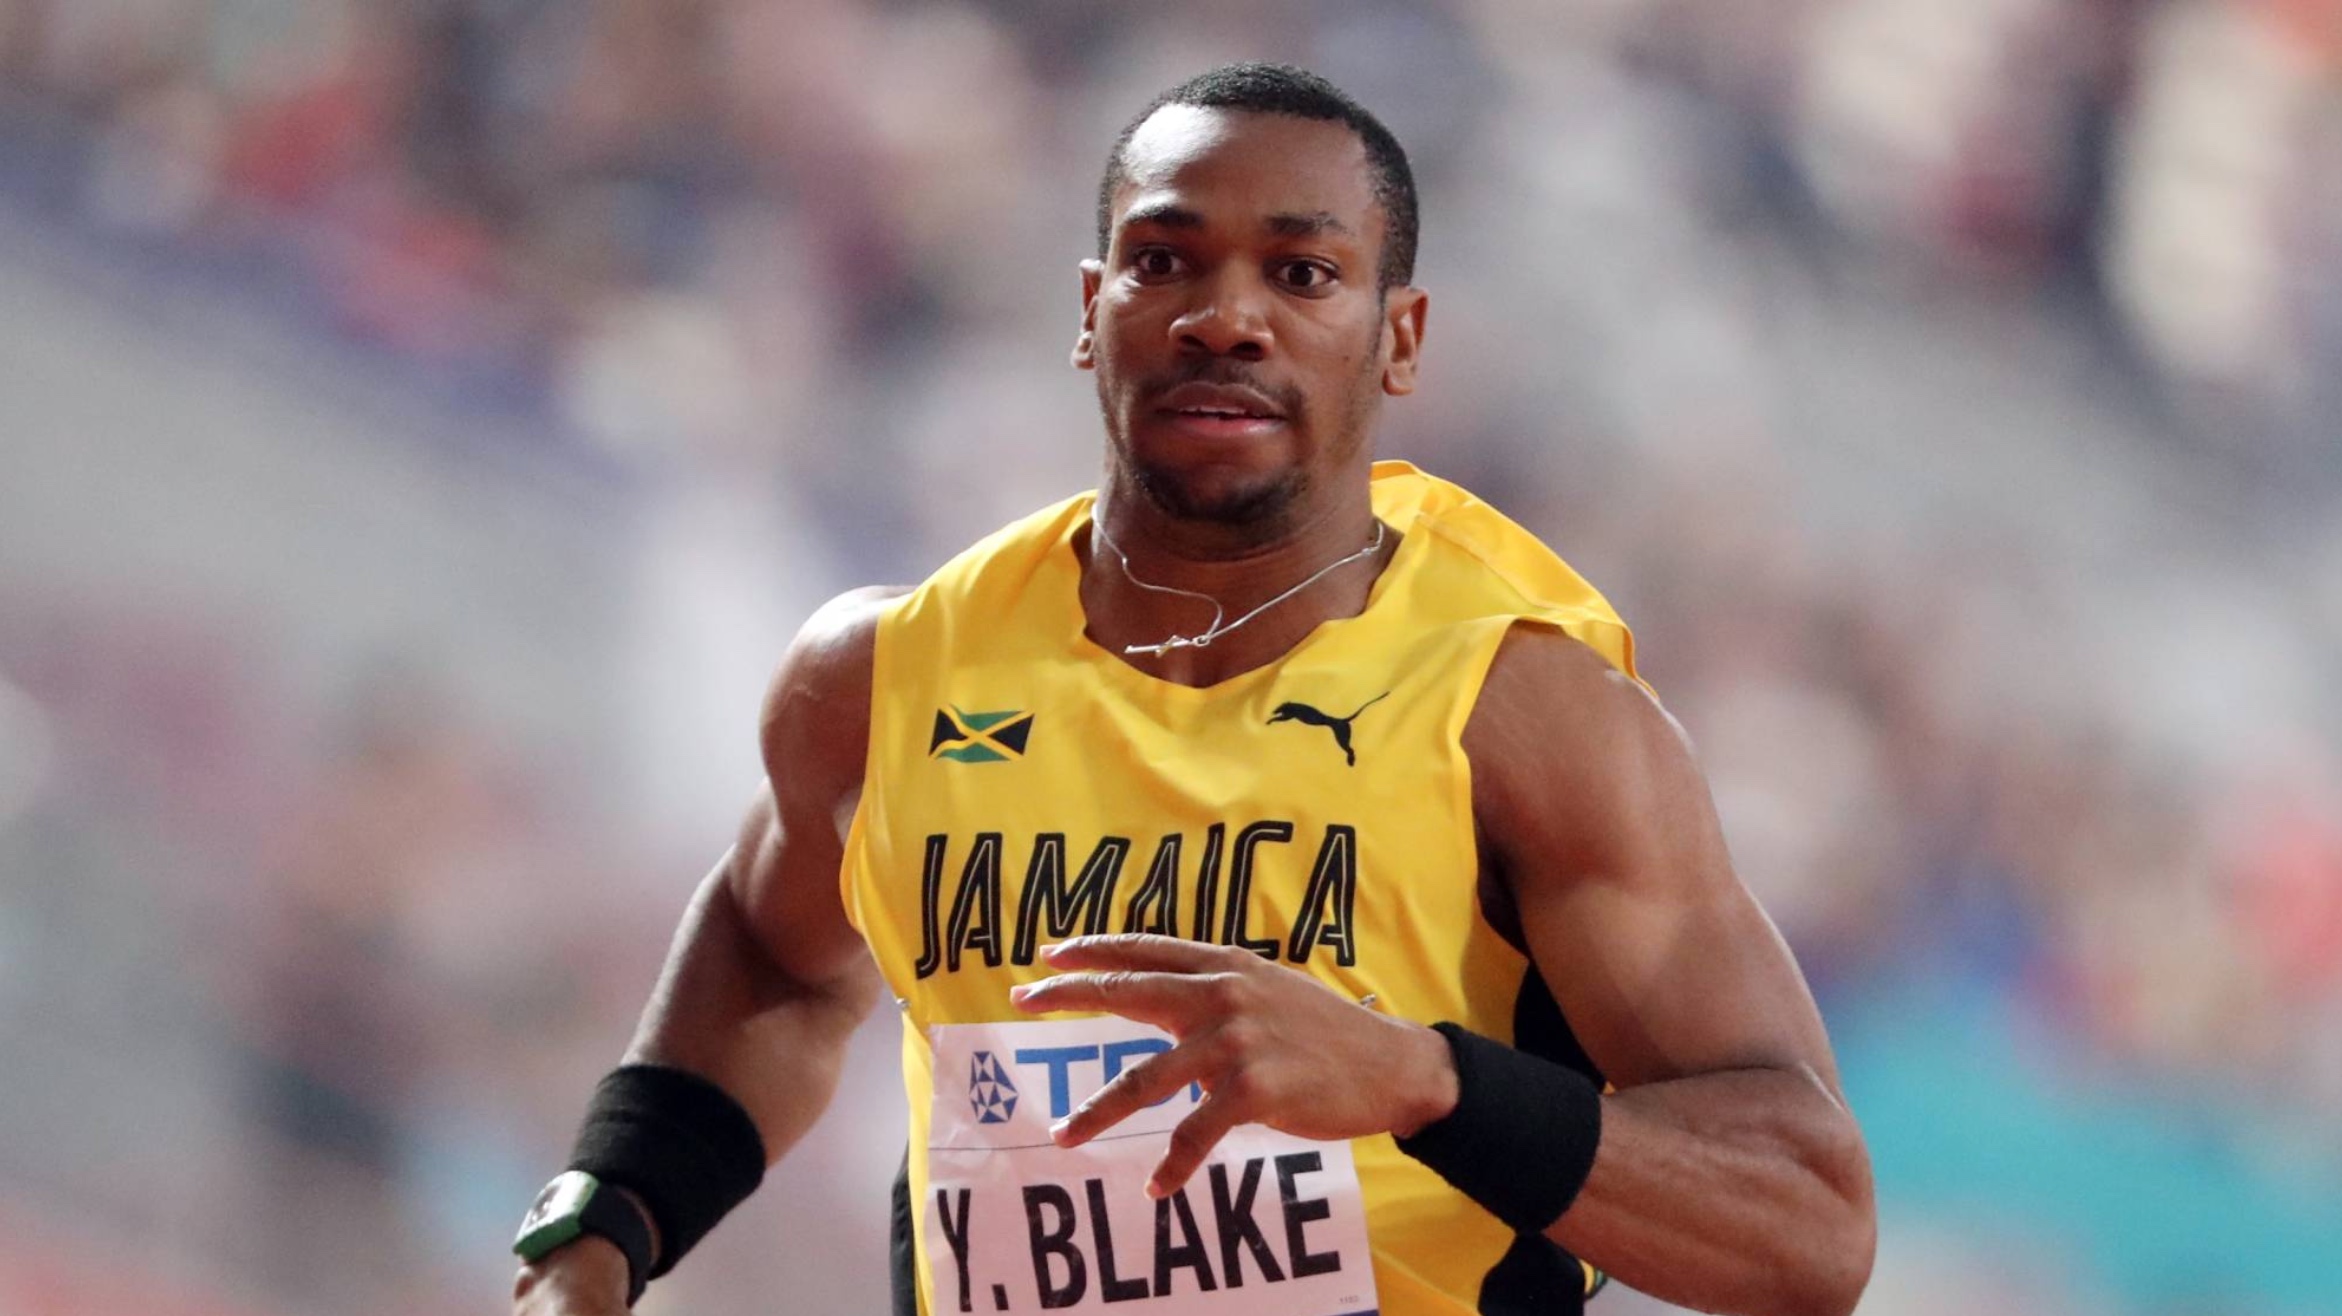 Yohan Blake Wins 100m Dash At Jamaica Trials In 9.85 – YARDHYPE